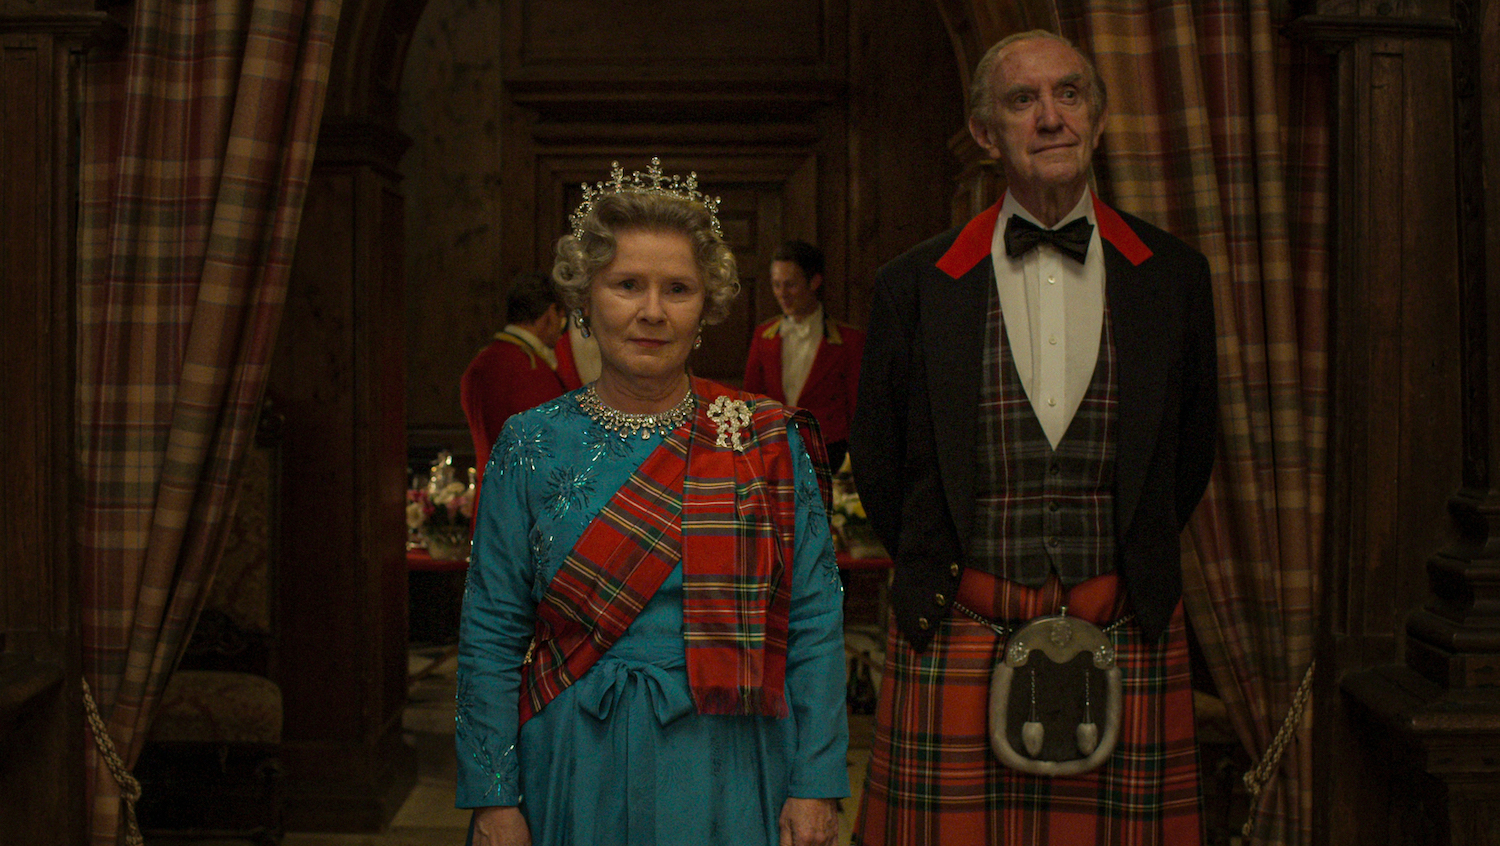 Imelda Staunton and Jonathan Pryce in "The Crown" Season 5